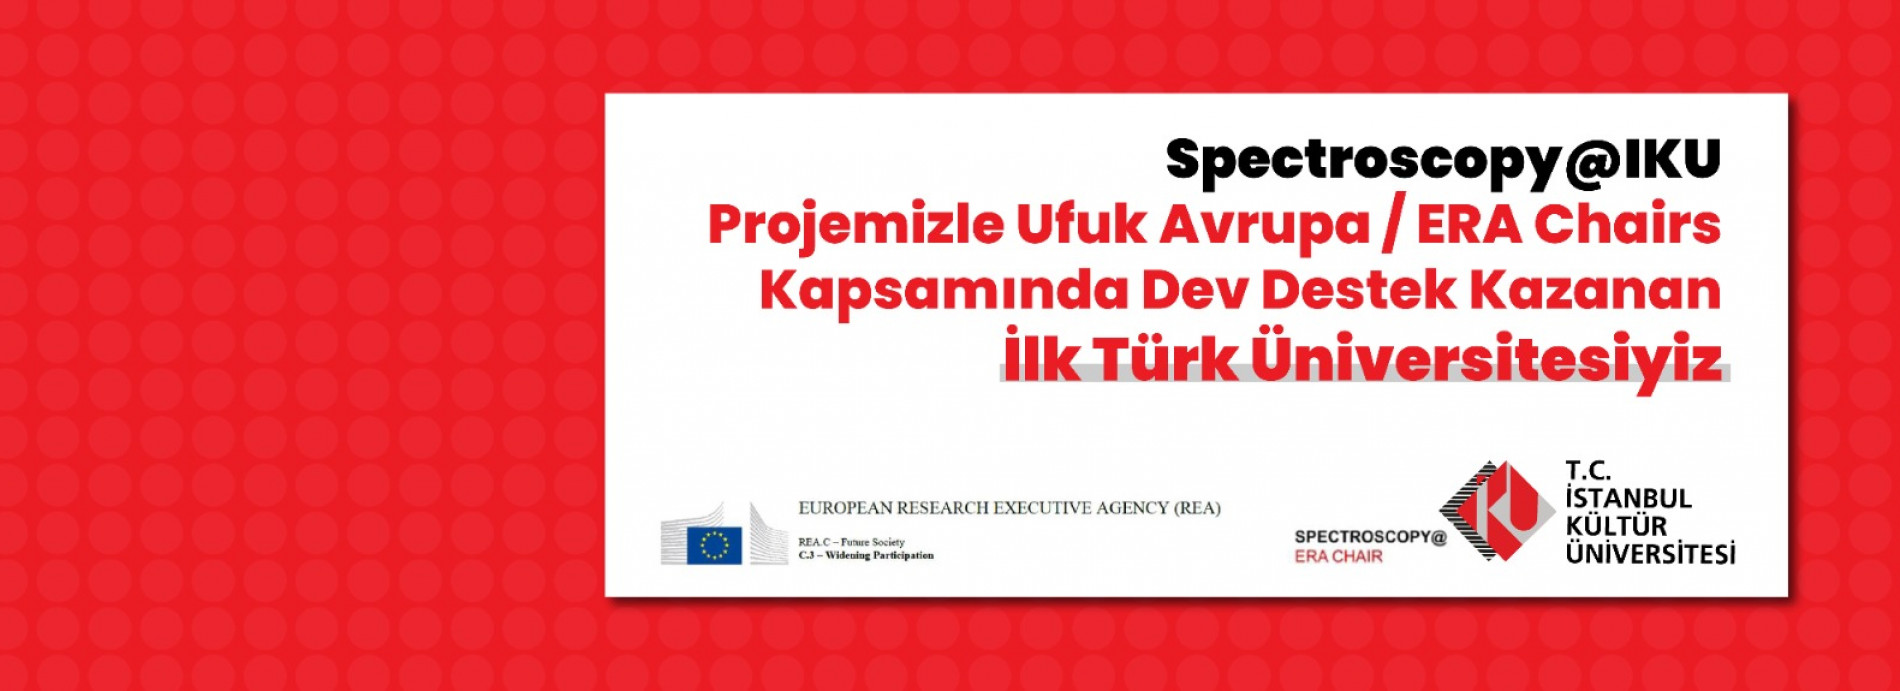 2.5 Million Euros of Support for Project to Kültür